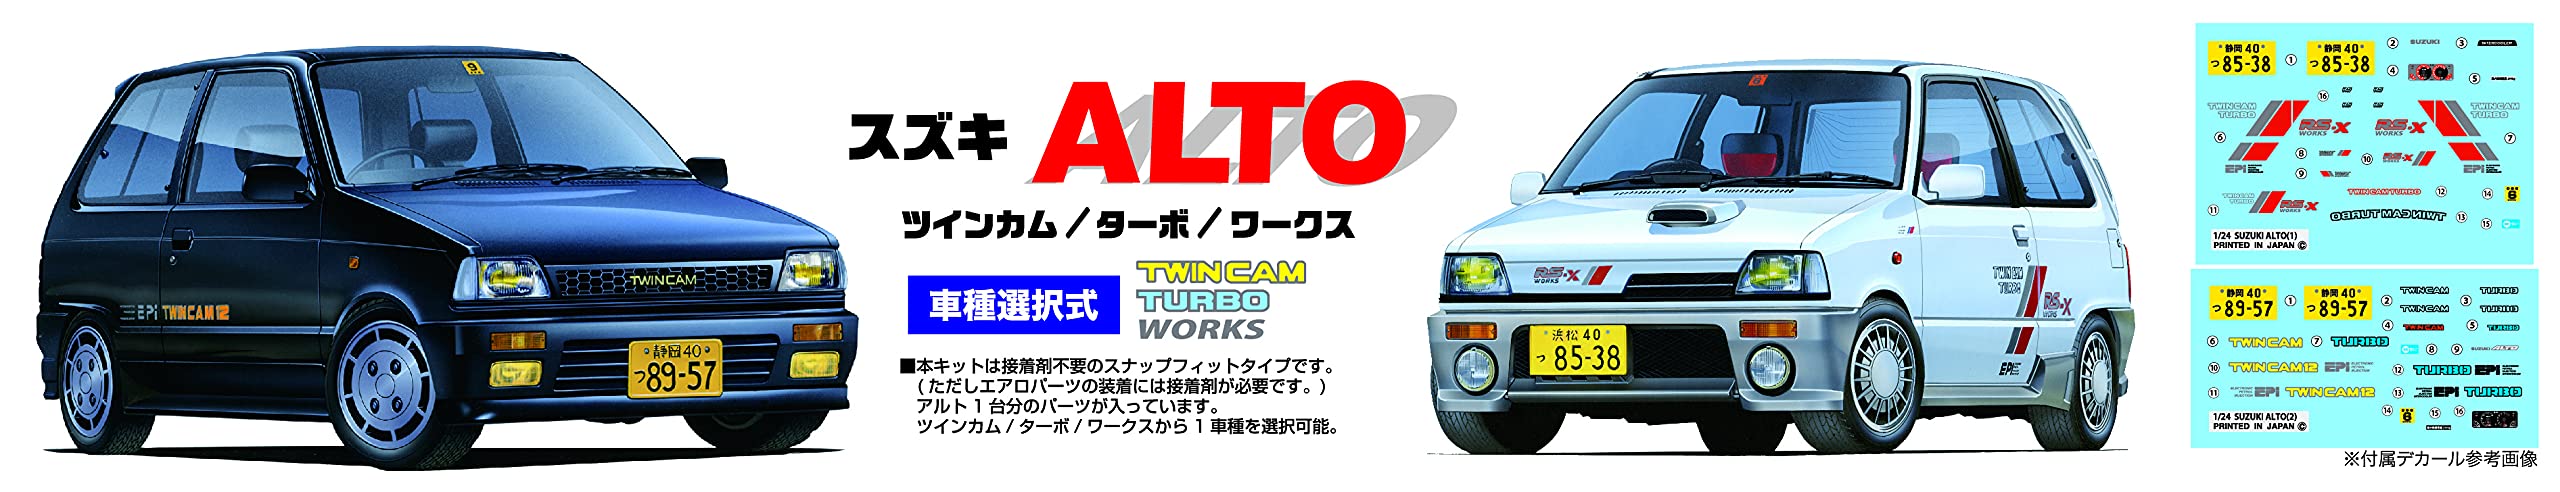 FUJIMI Inch Up 1/24 Suzuki Alto Twincam / Turbo / Works Modèle en plastique